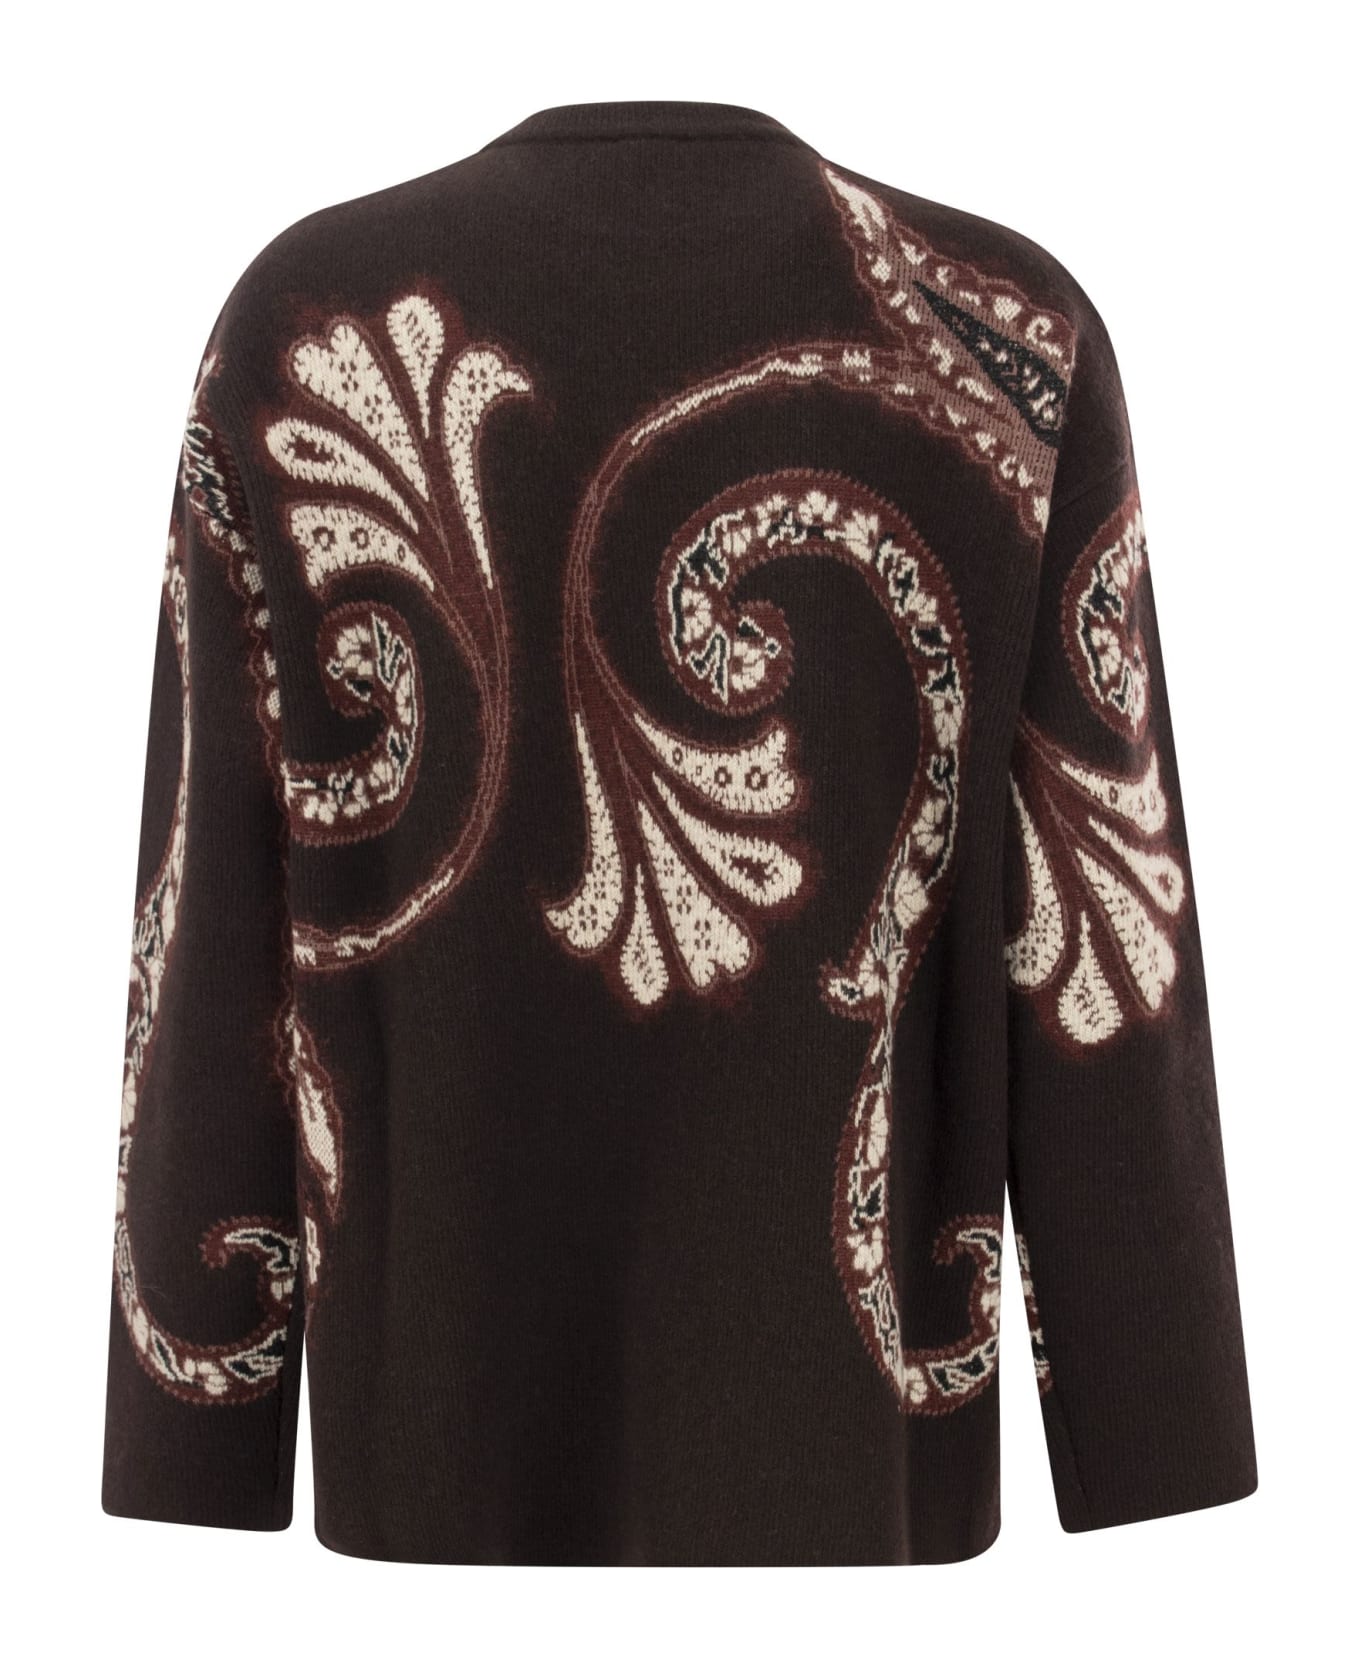 Etro Wool Sweater With Foliage Print - Bordeaux ニットウェア